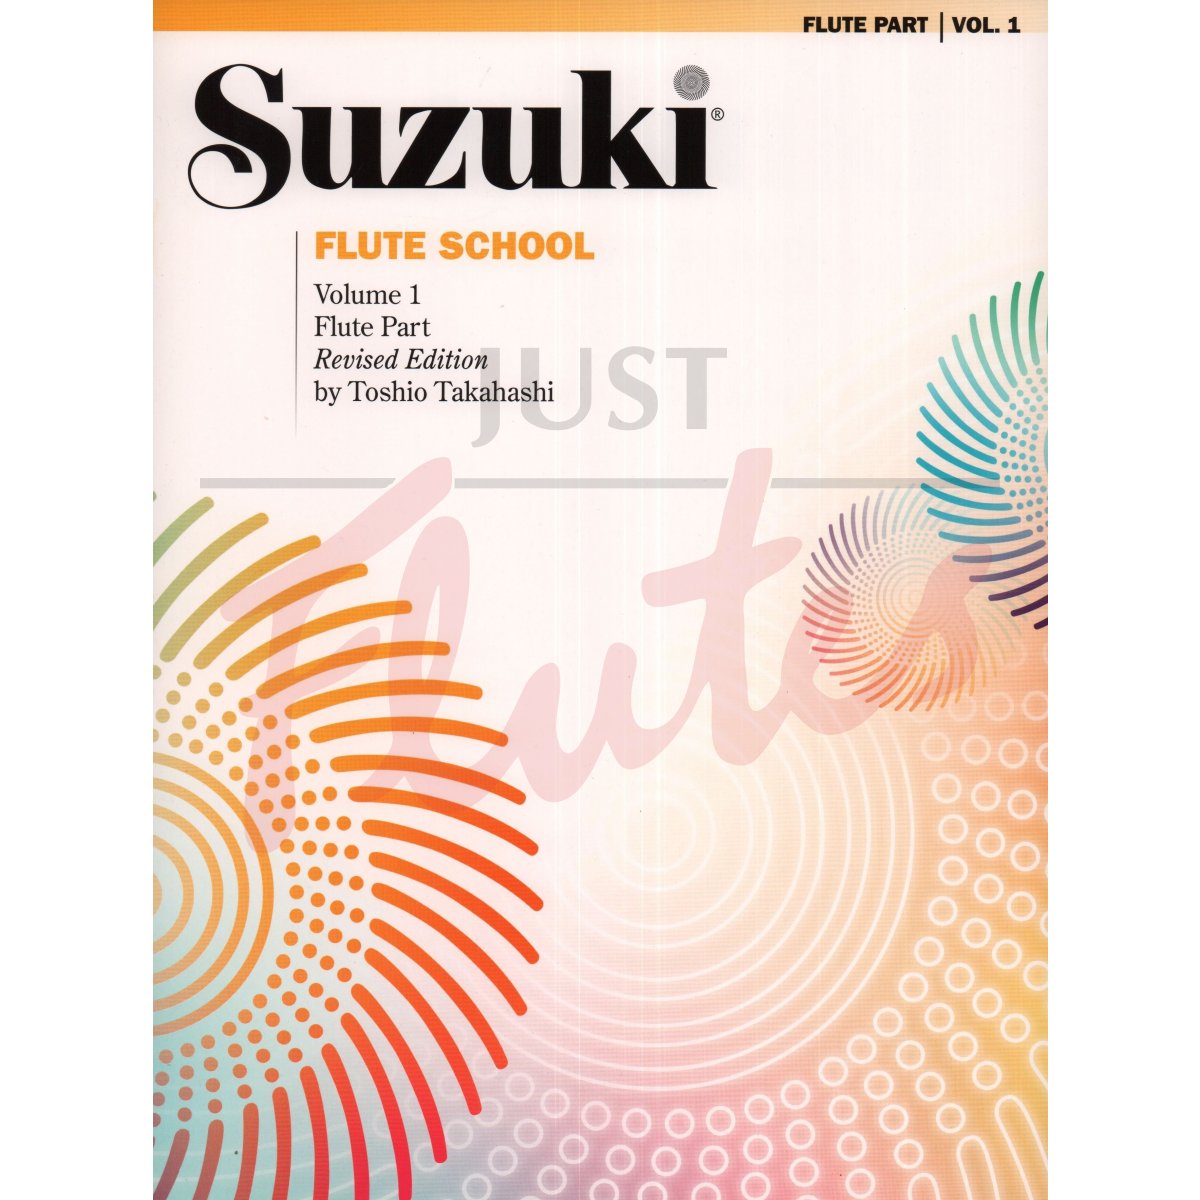 Suzuki Flute School Vol 1 (Revised Edition) [Flute Part]